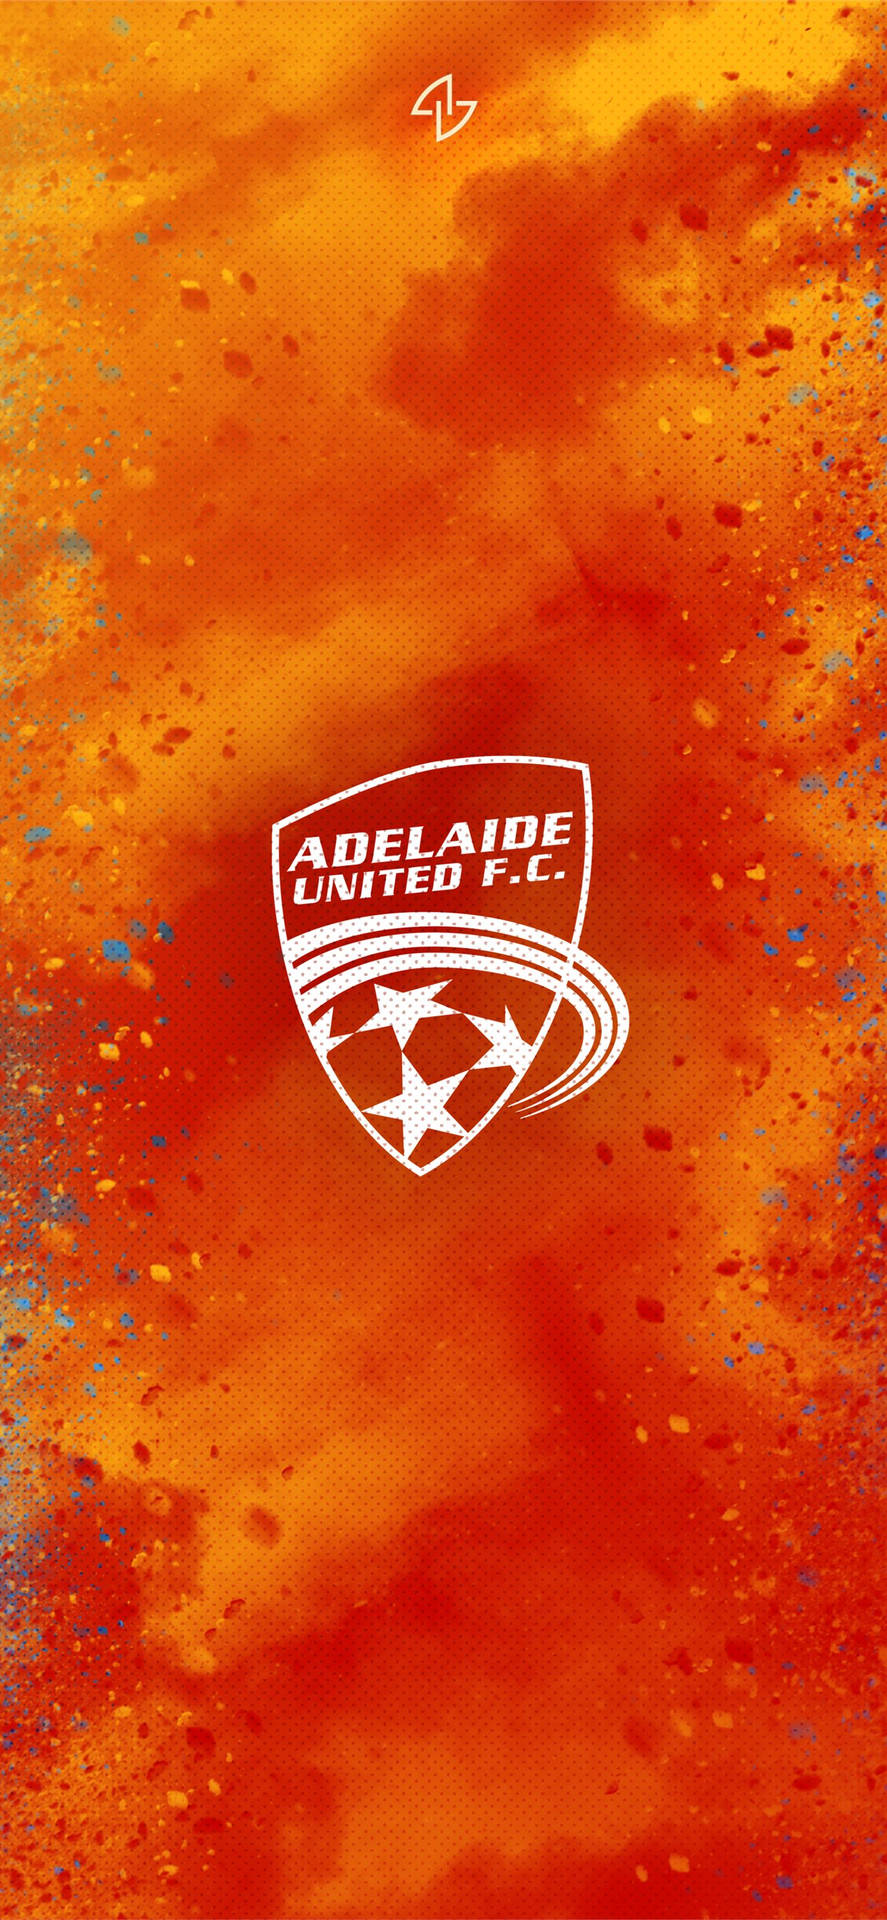 Adelaide United Football Club Emblem Background